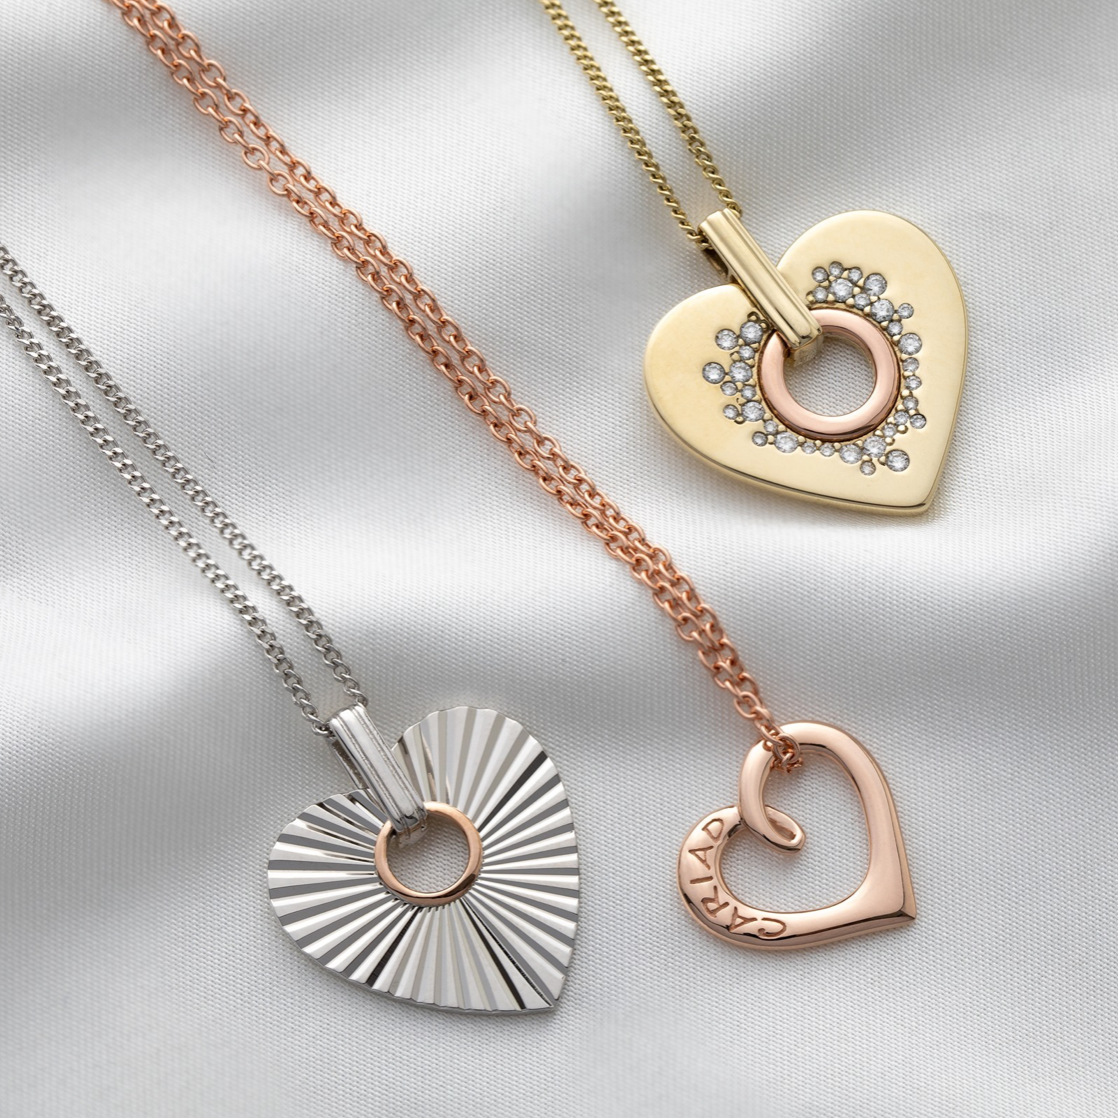 Clogau Necklace for Sale UK | Clogau Heart Necklace | Clogau Gold & Silver  Necklaces